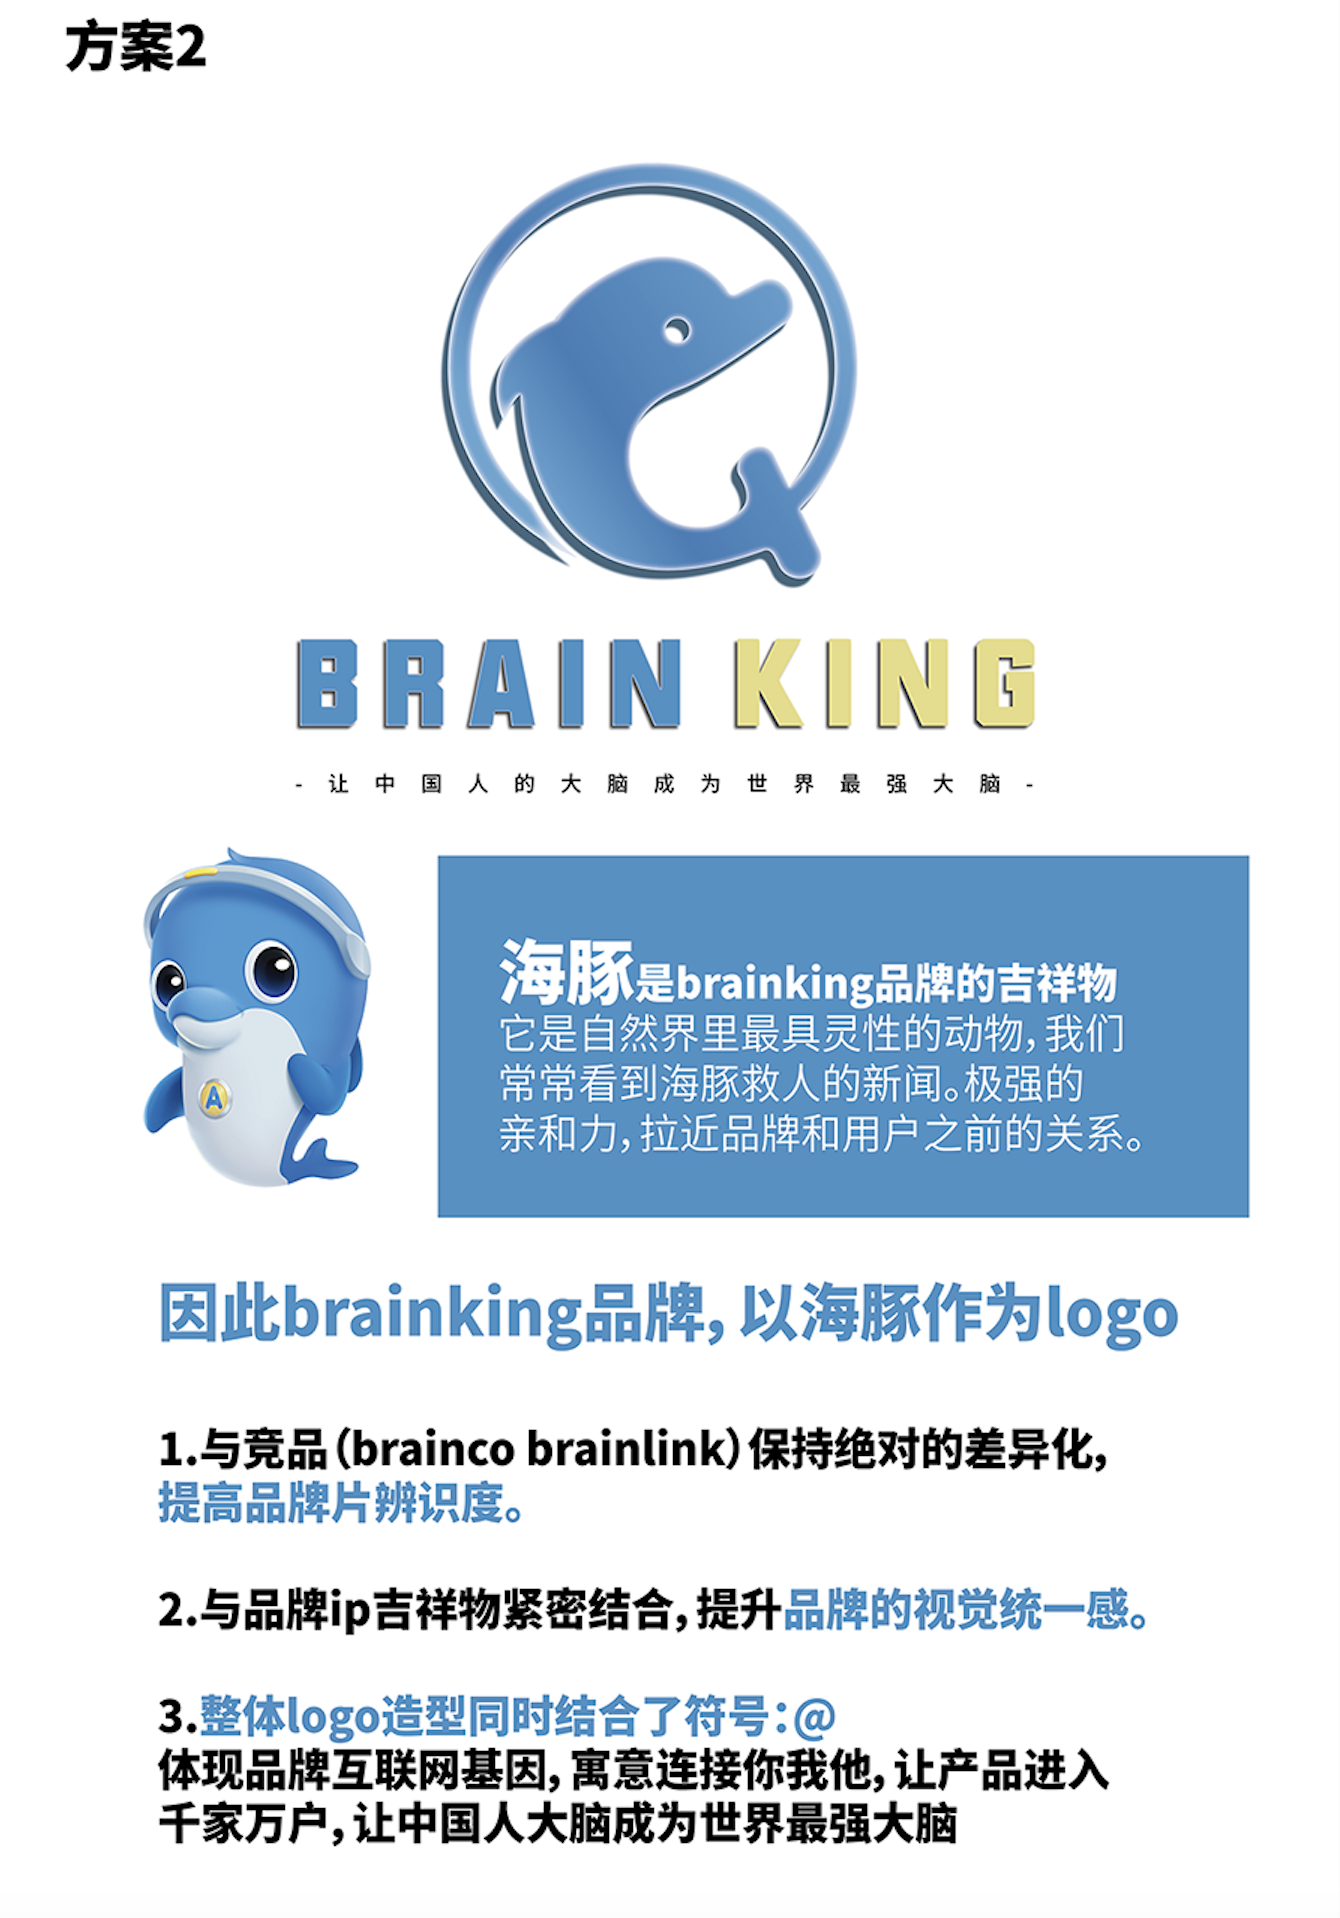 brainking 人工智能科技产品 品牌包装设计图0